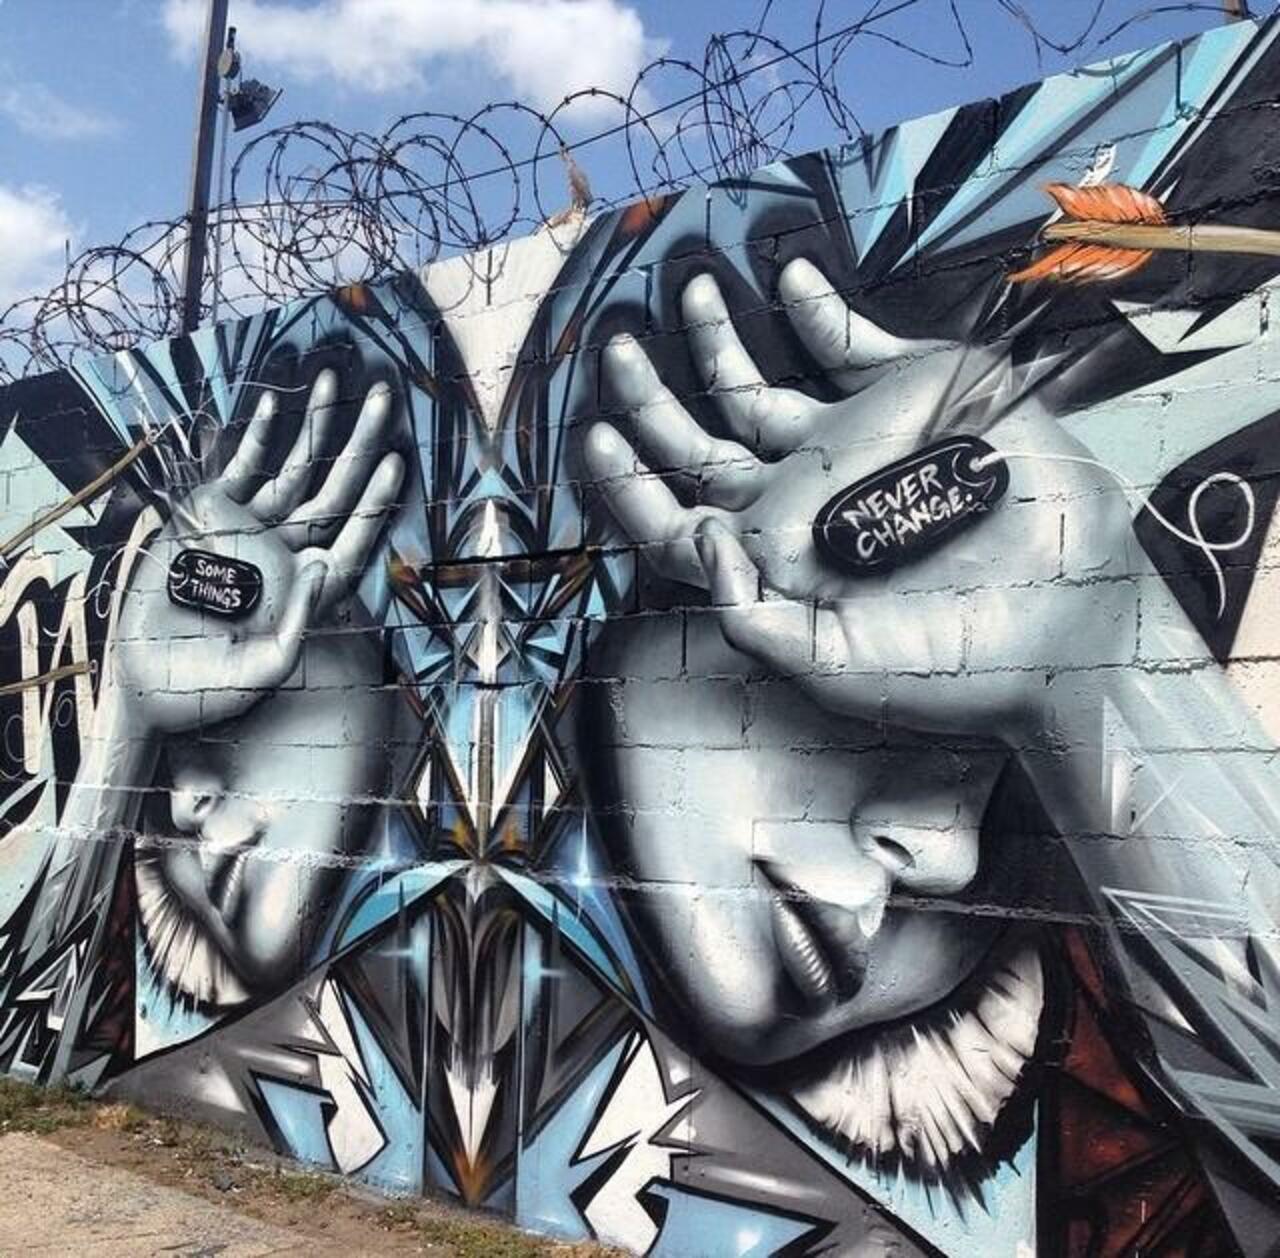 RT @designopinion: Artist @StarFighterA new Street Art mural titled 'Some Things Never Change' #art #mural #graffiti #streetart http://t.co/v7WqyoEAYg